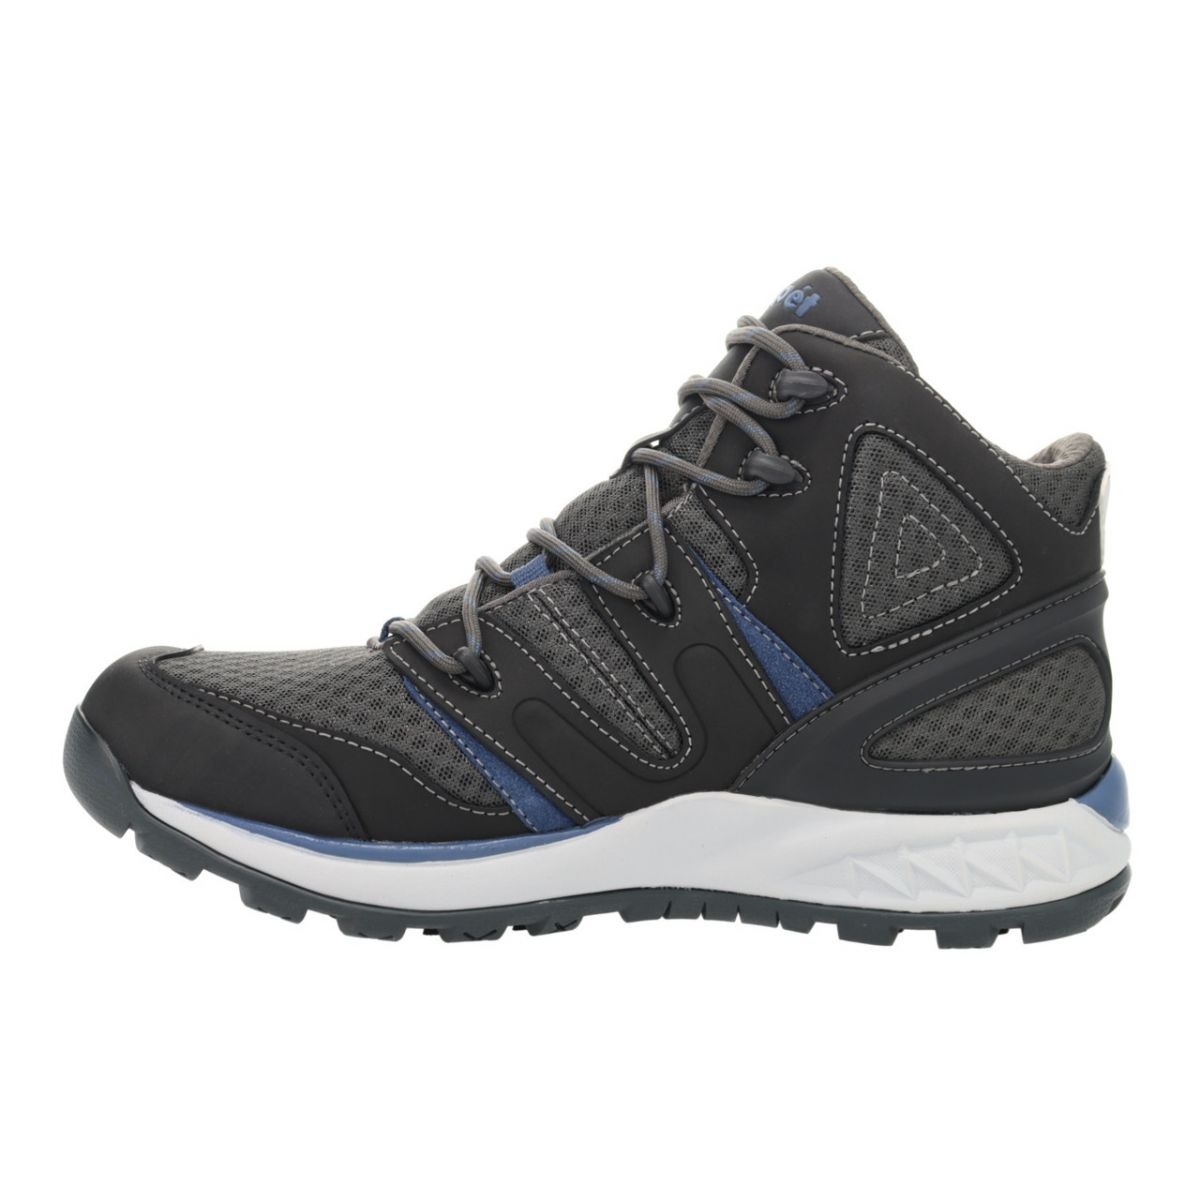 Propet Men's Veymont Waterproof Hiking Boot Grey/Blue - MOA022SGRB GREY/BLUE - GREY/BLUE, 11.5 XX-Wide